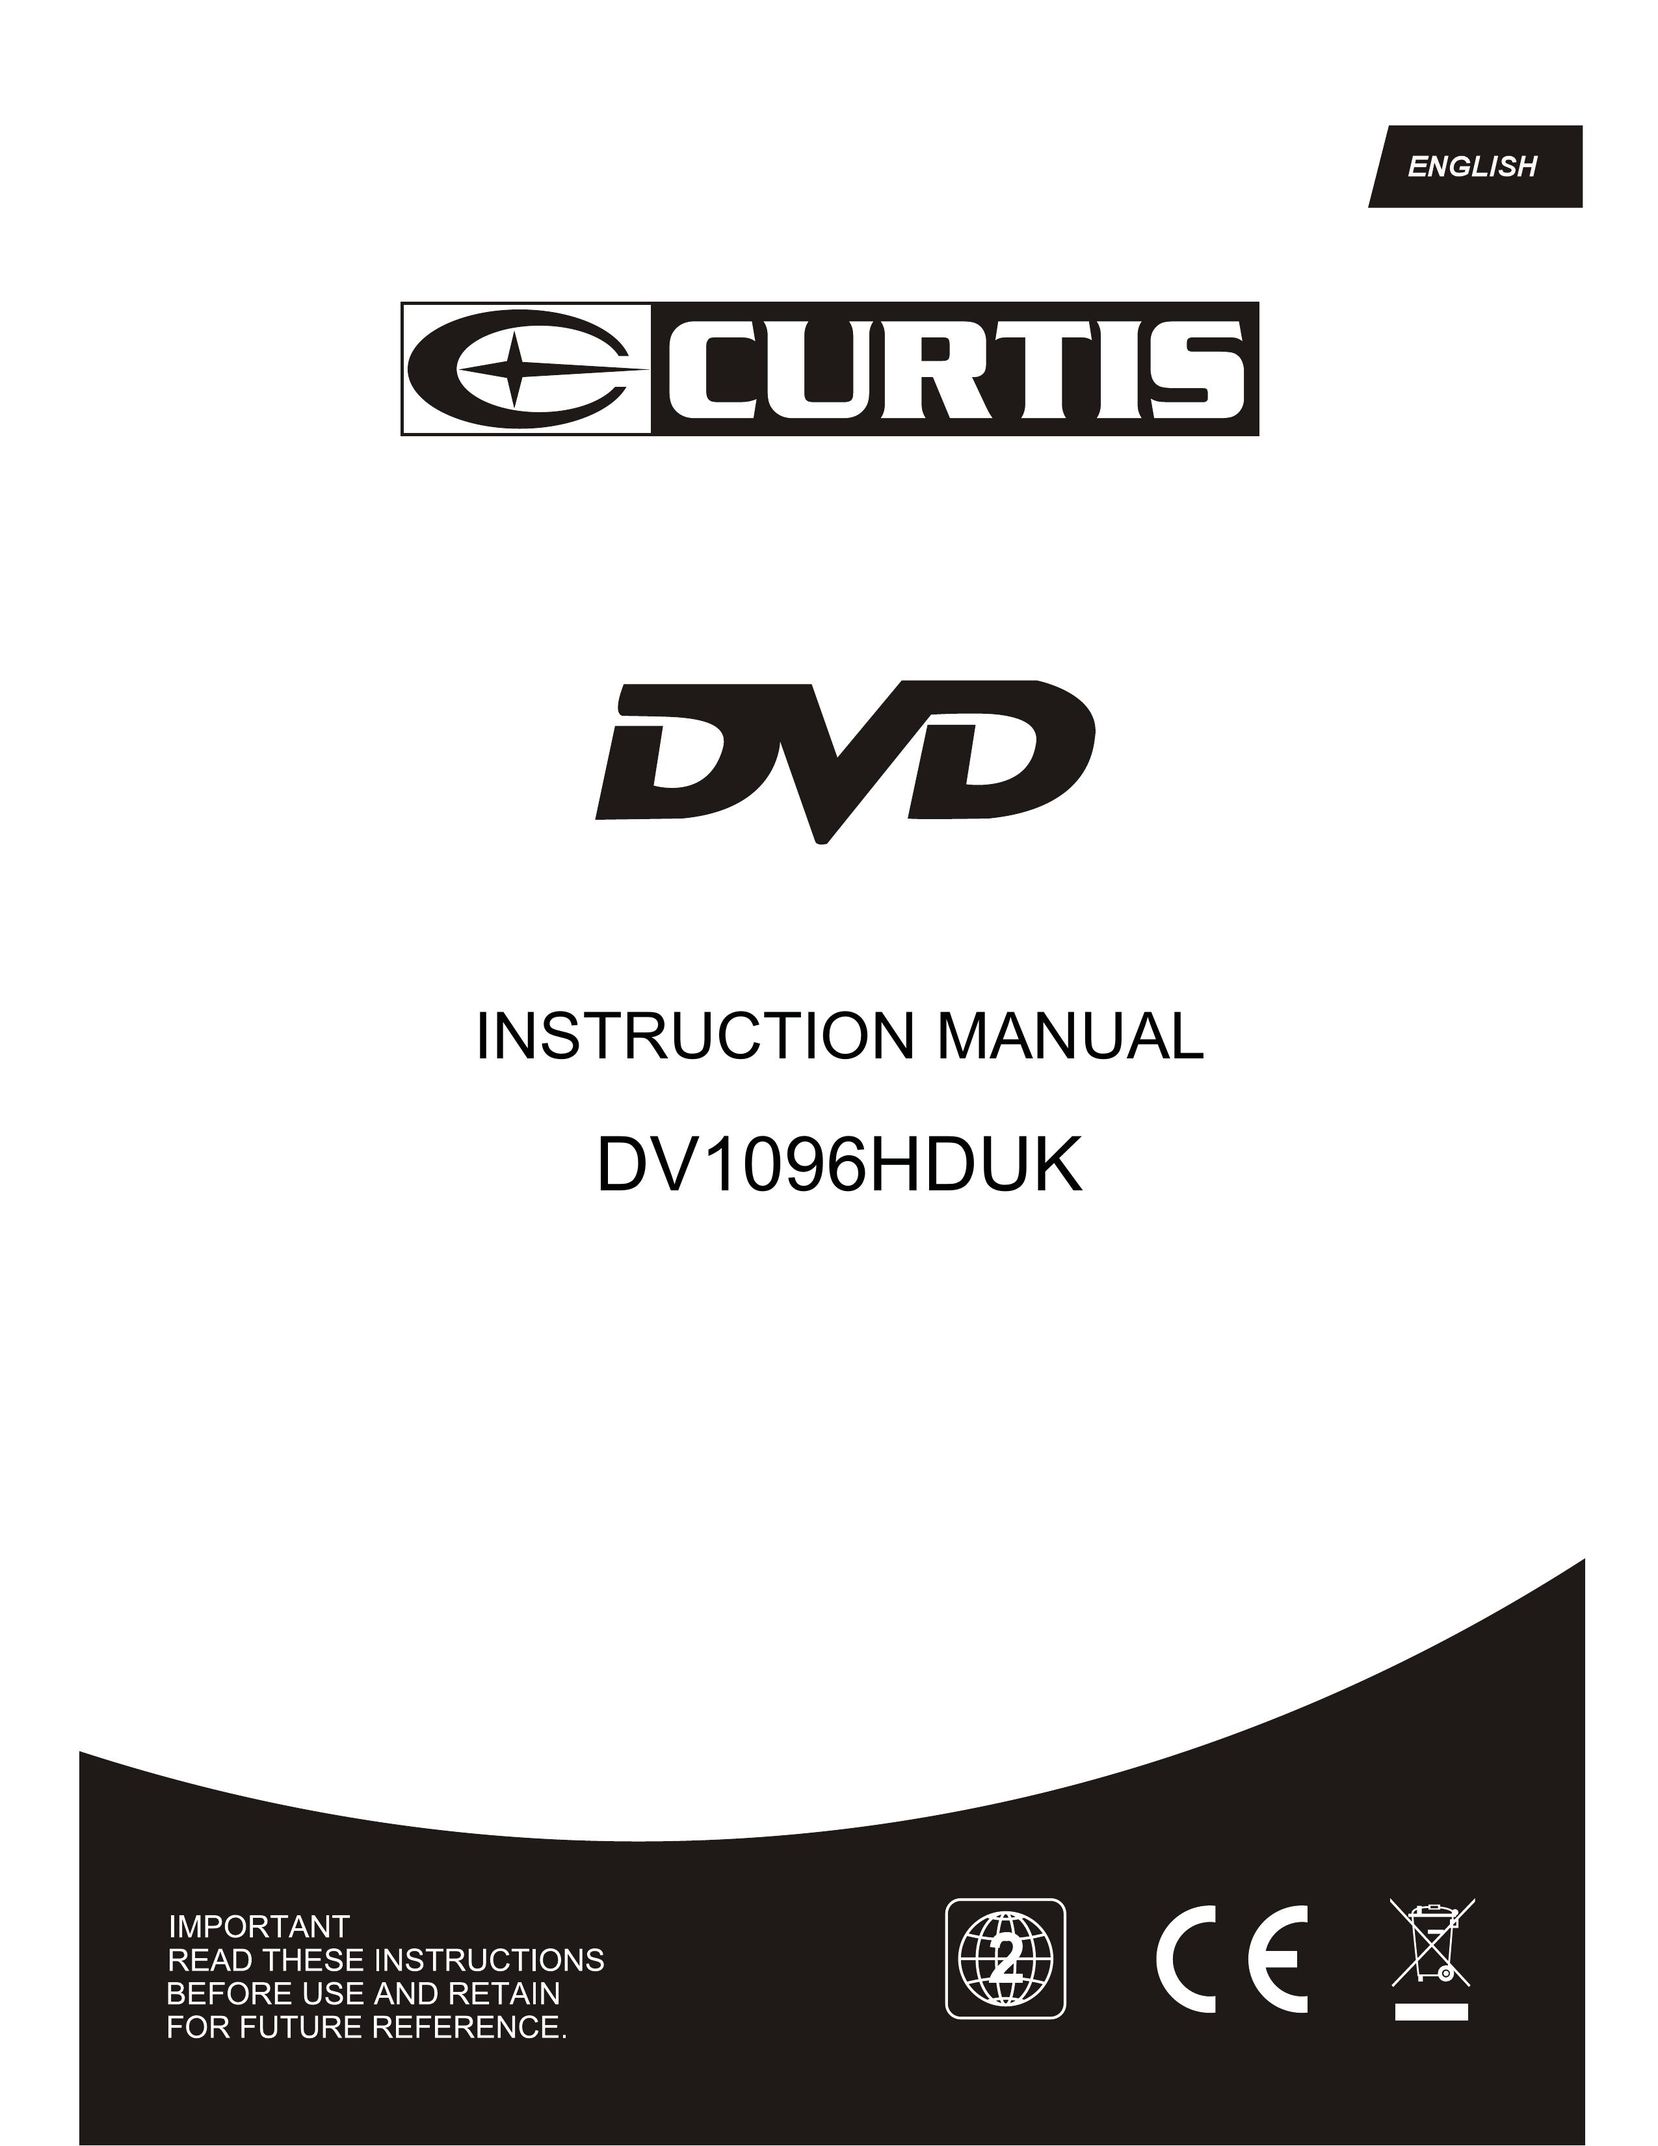 Curtis DV1096HDUK DVD Player User Manual